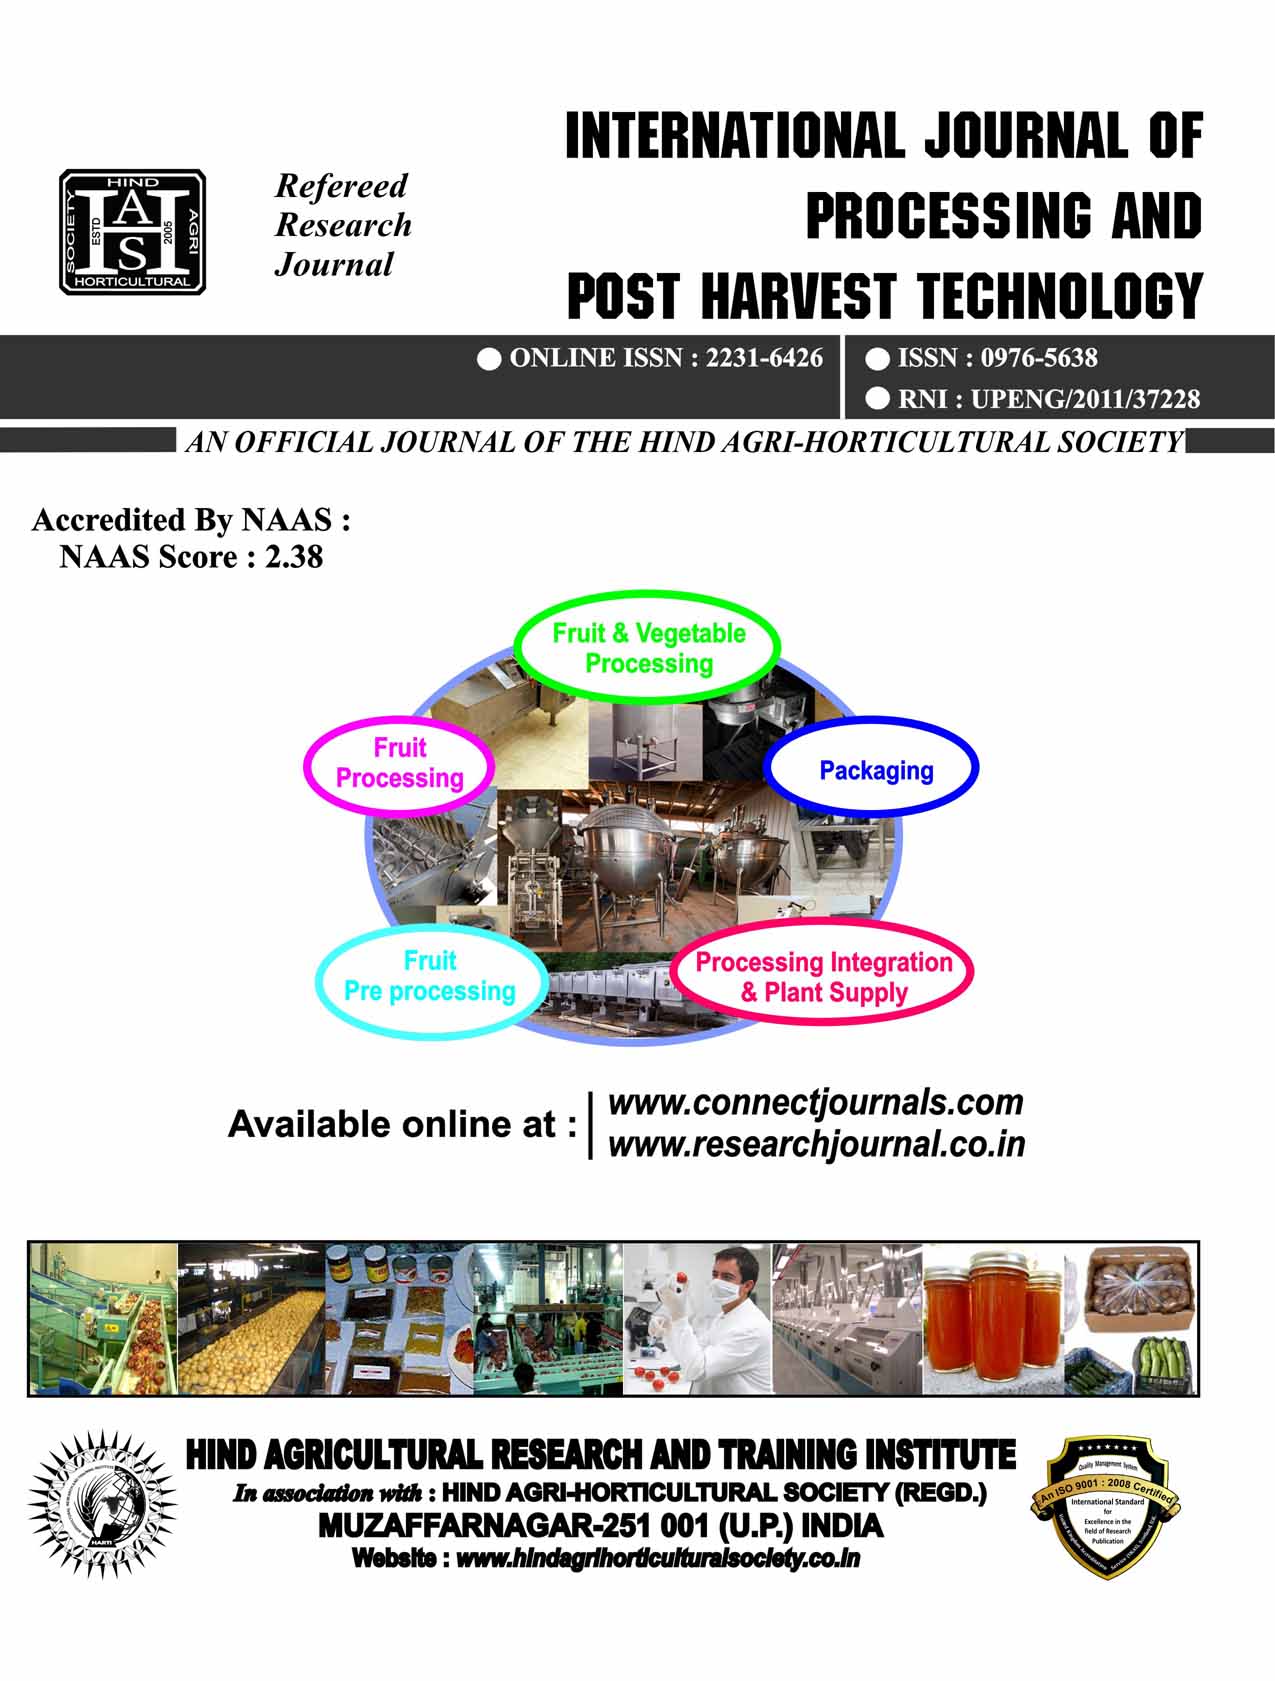 Internat. J. Proc. & Post Harvest Technol.